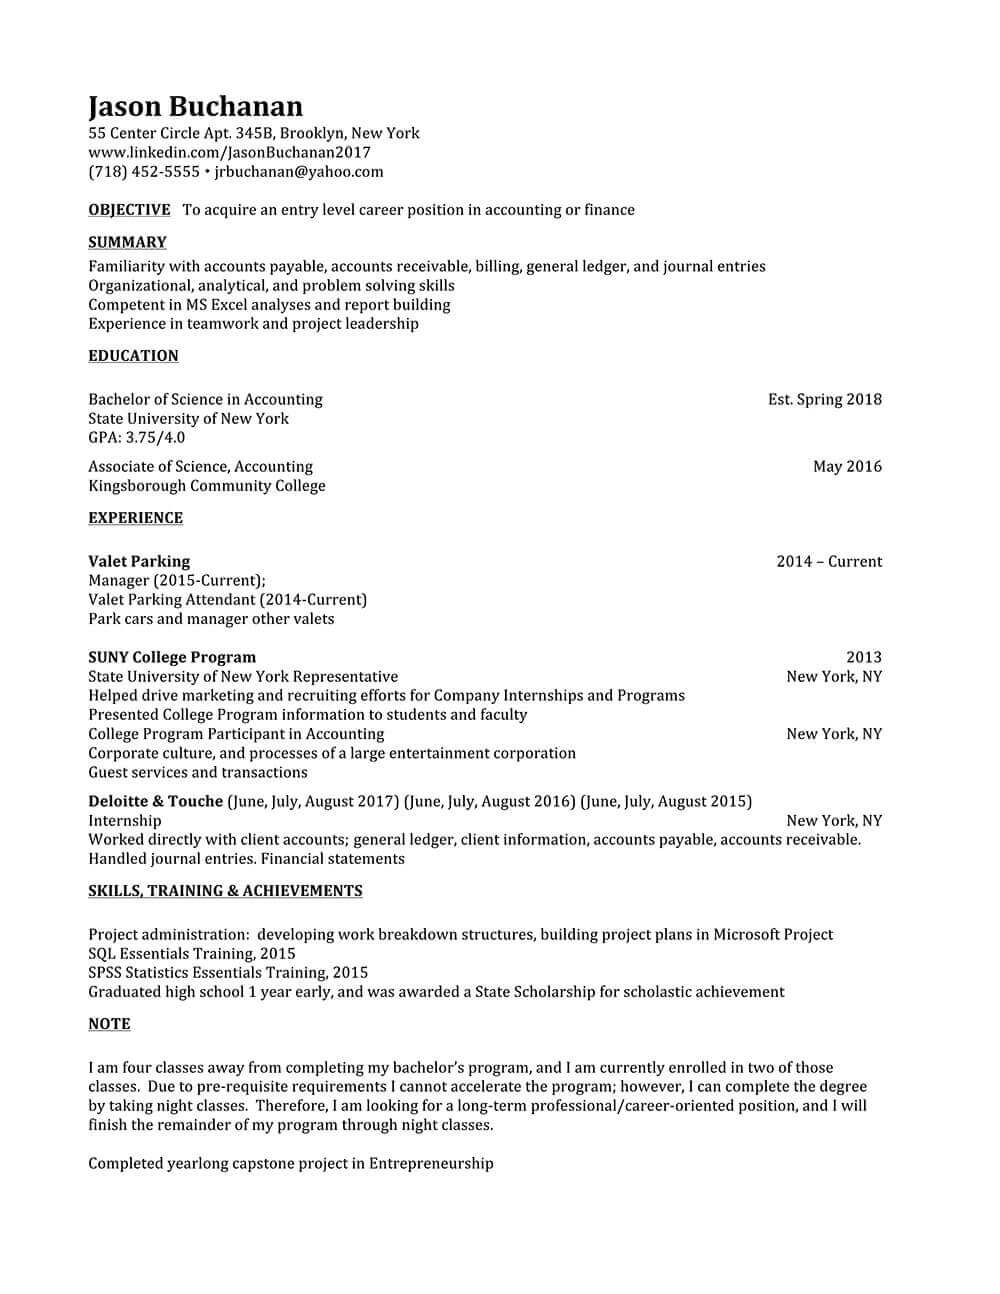 Professional Resume Writers Resume 1 Before professional resume writers|wikiresume.com